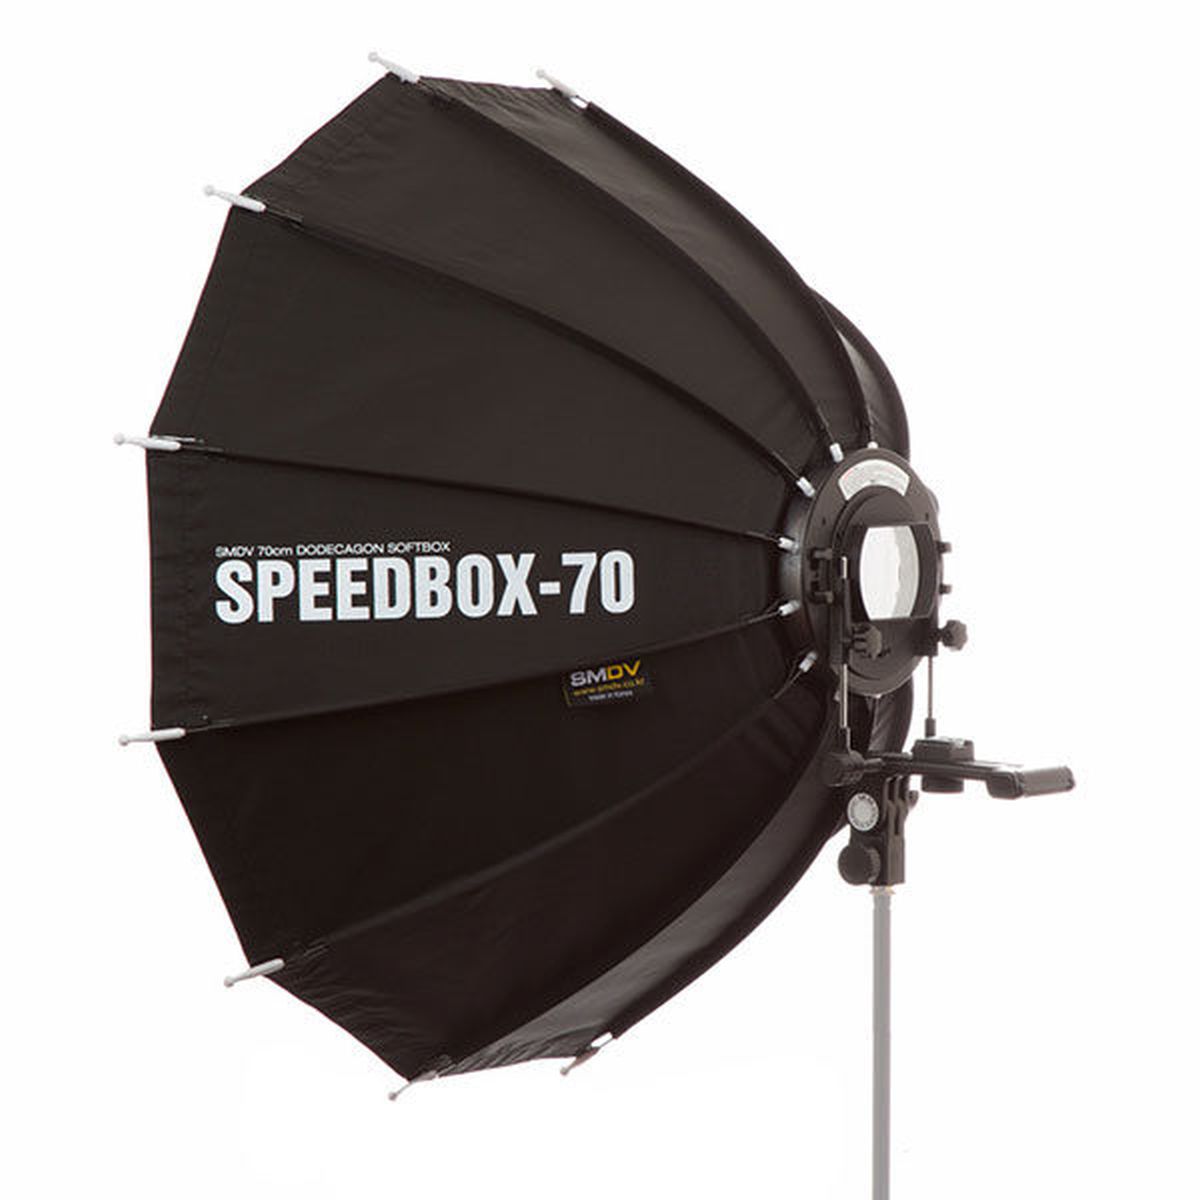 SMDV Speedbox-70 Speed Light (SB-03)